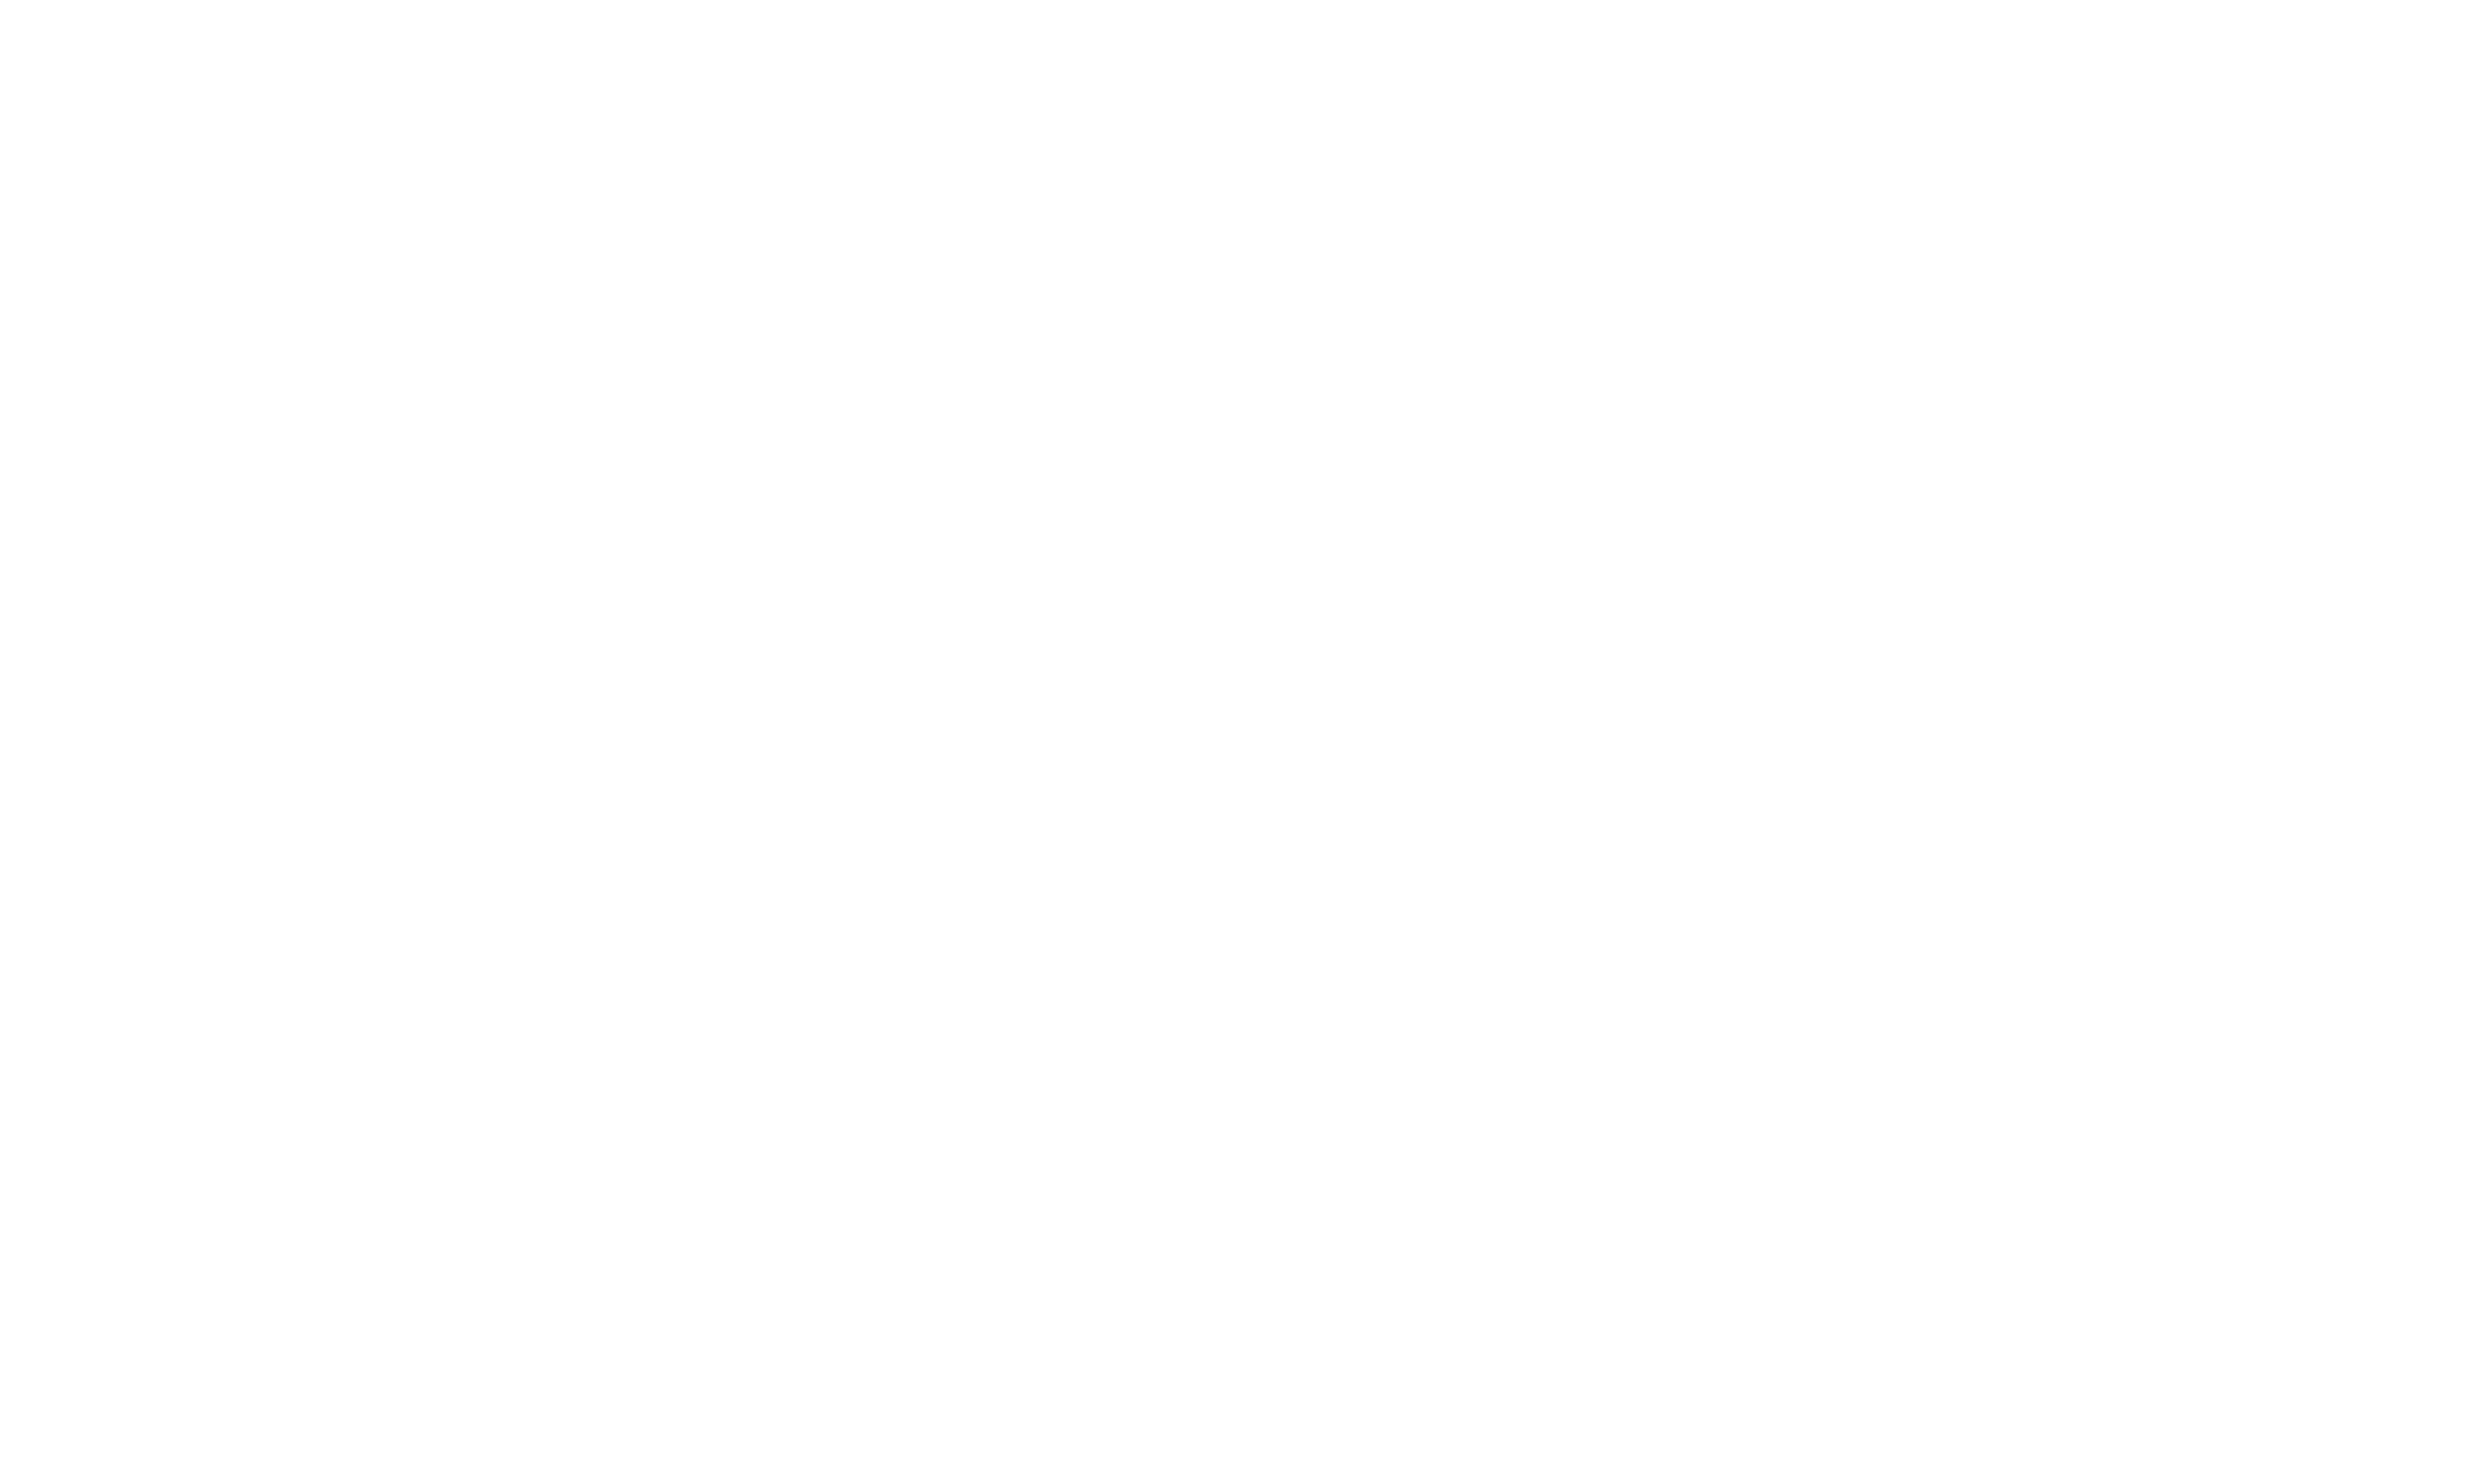 Frees Service Nederland